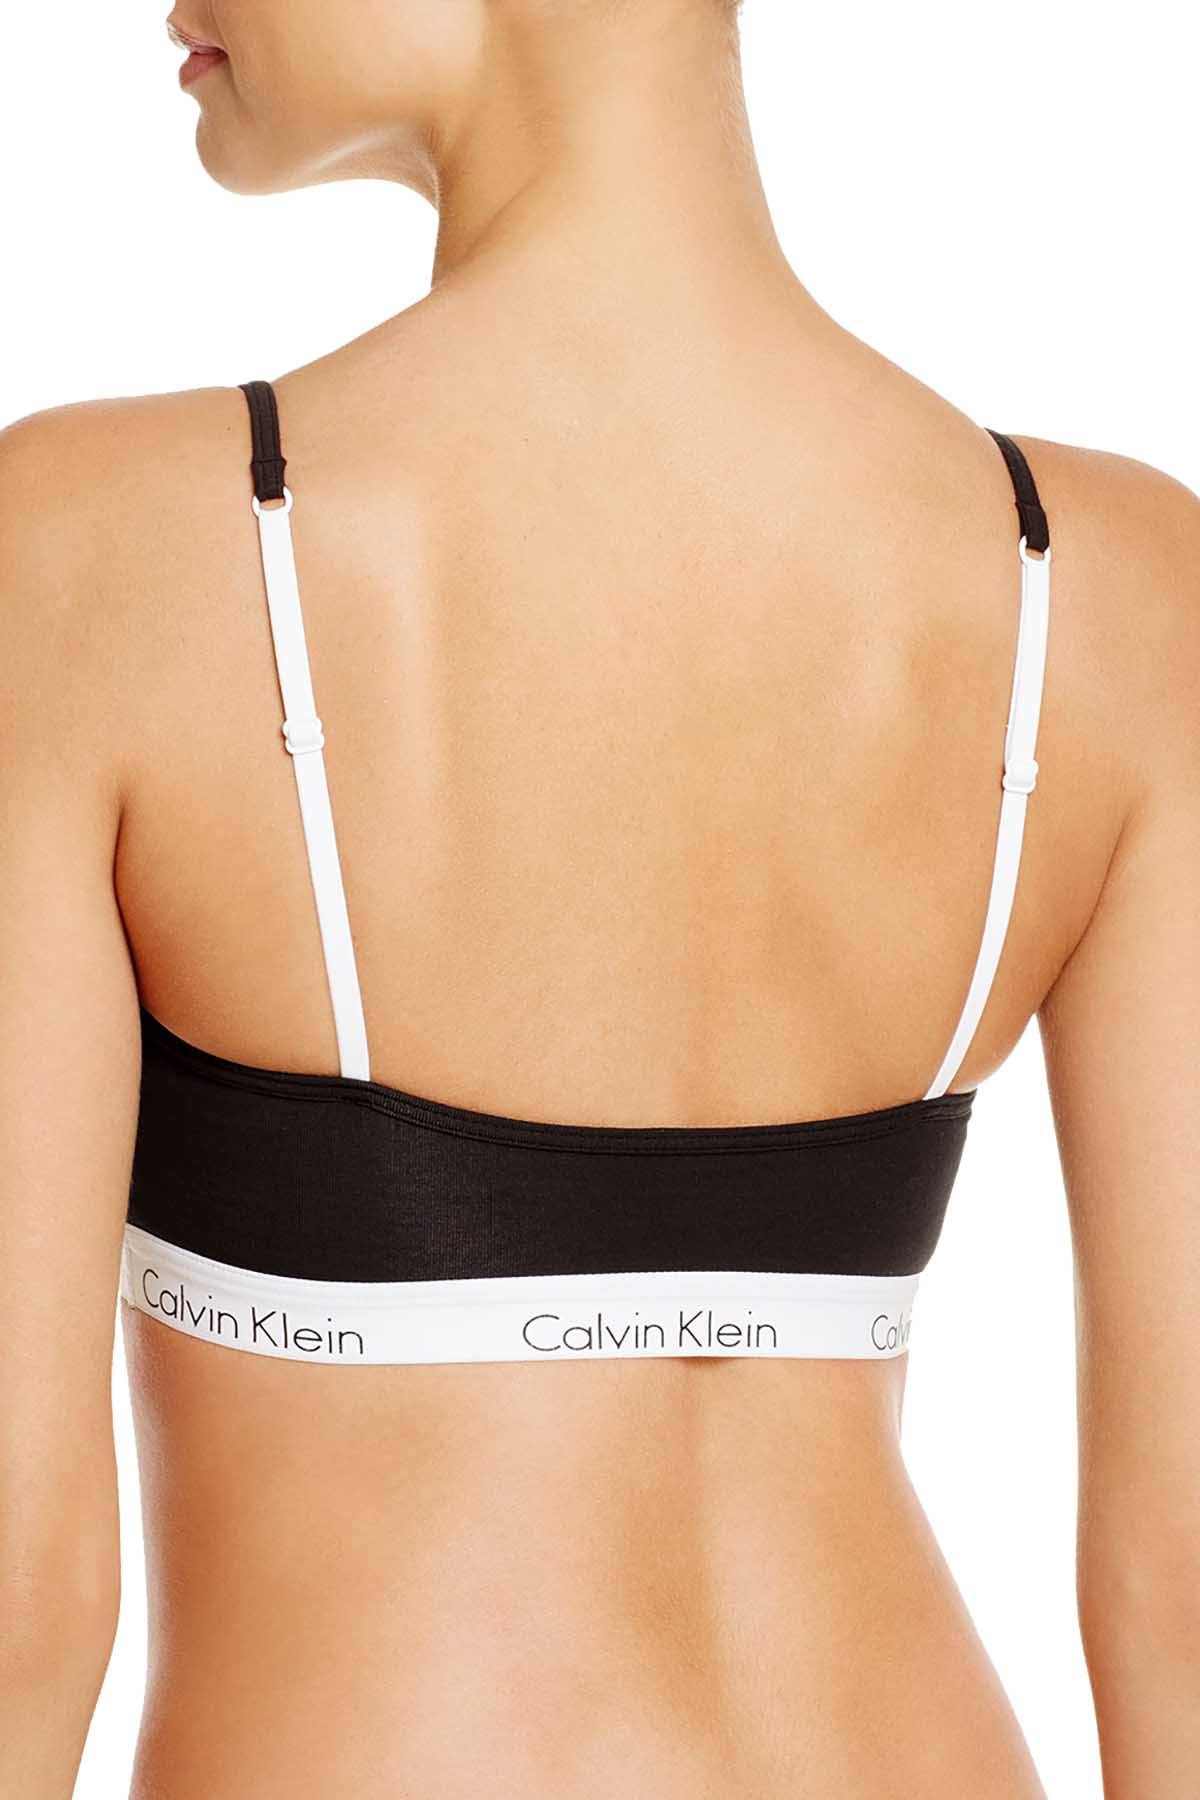 Calvin Klein Black CK One Logo Bralette